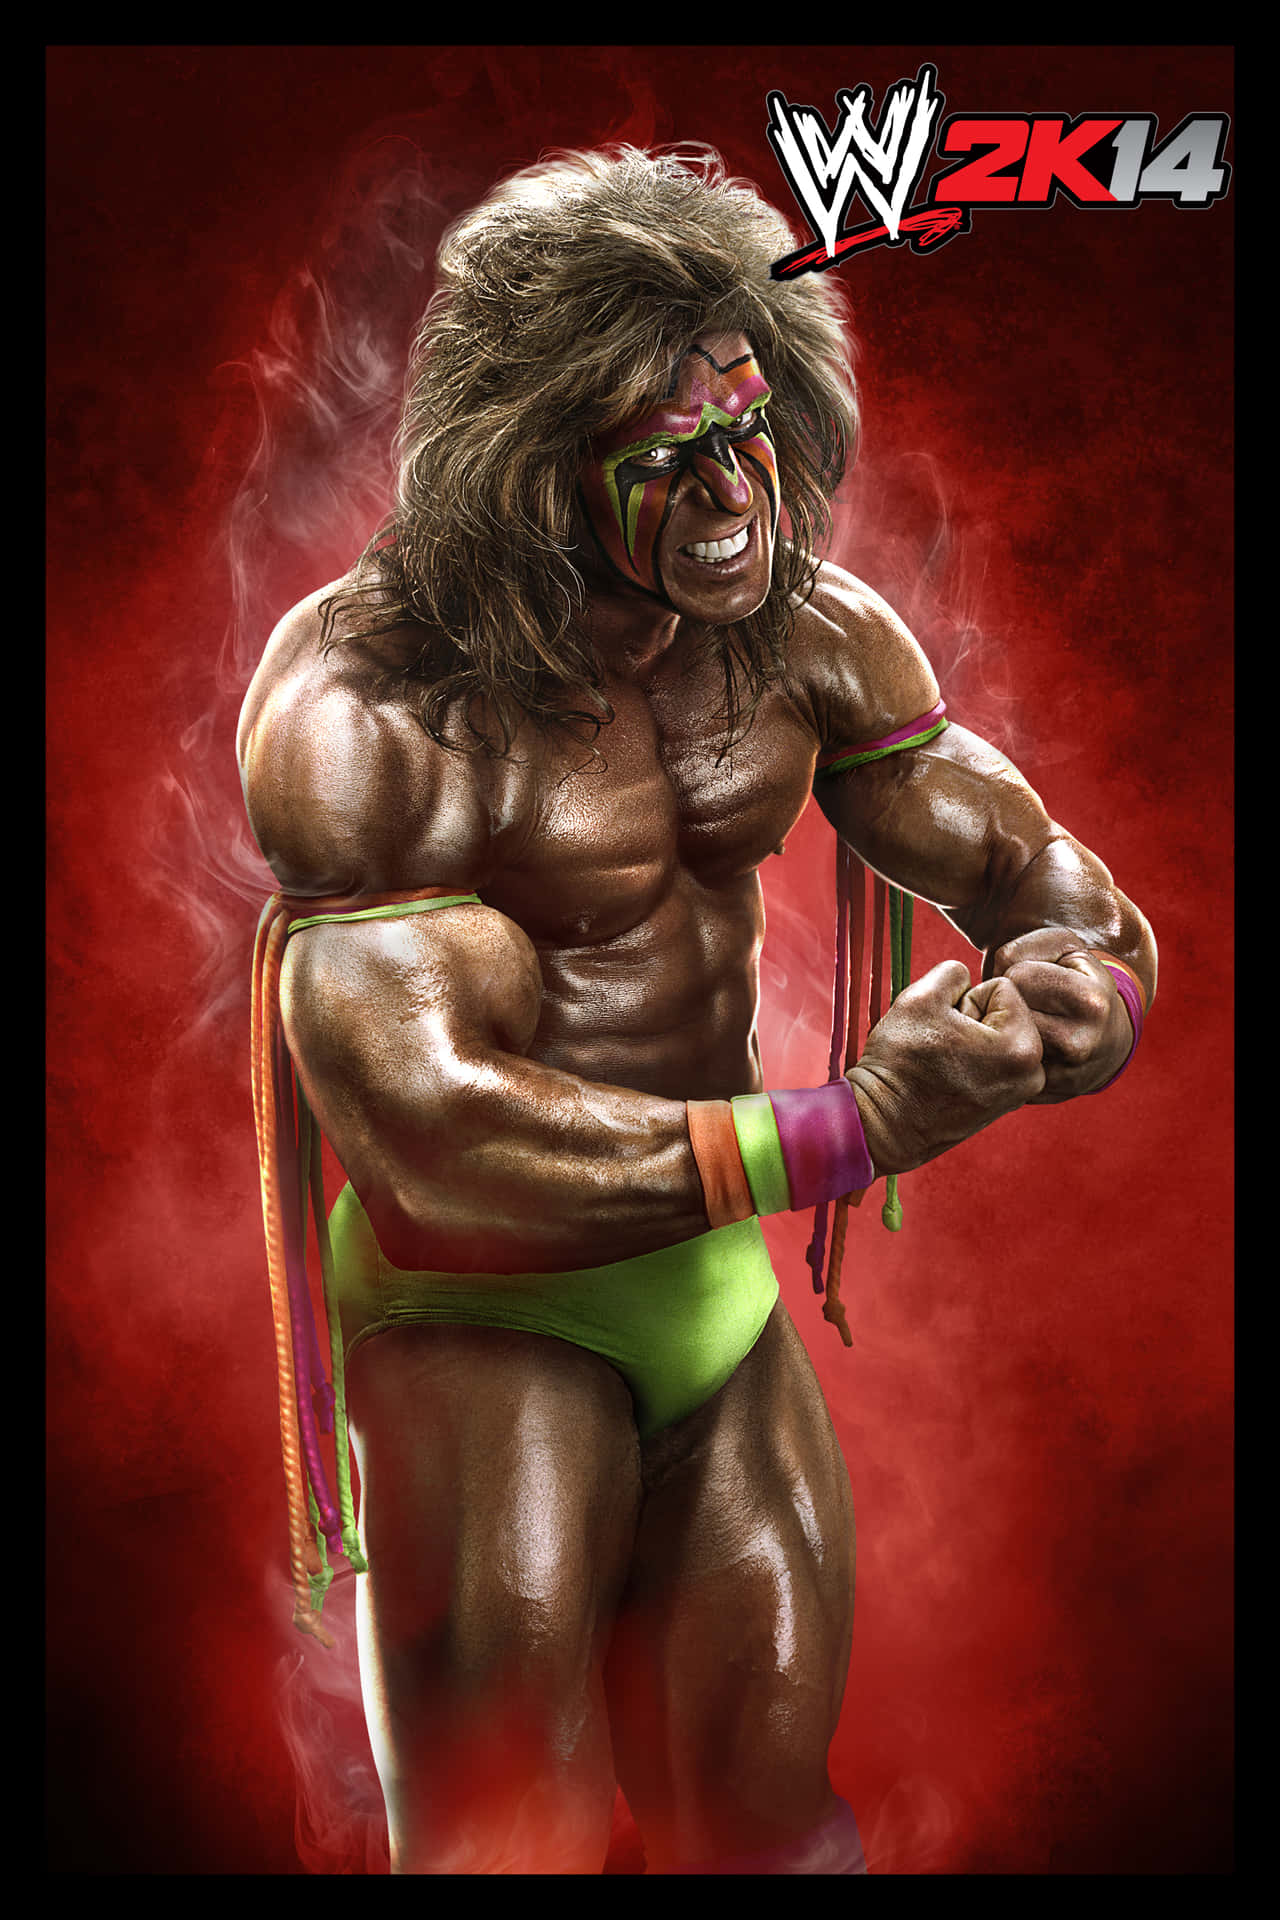 Wcw Champion Ultimate Warrior Wwe 2k14 Digital Artwork Background